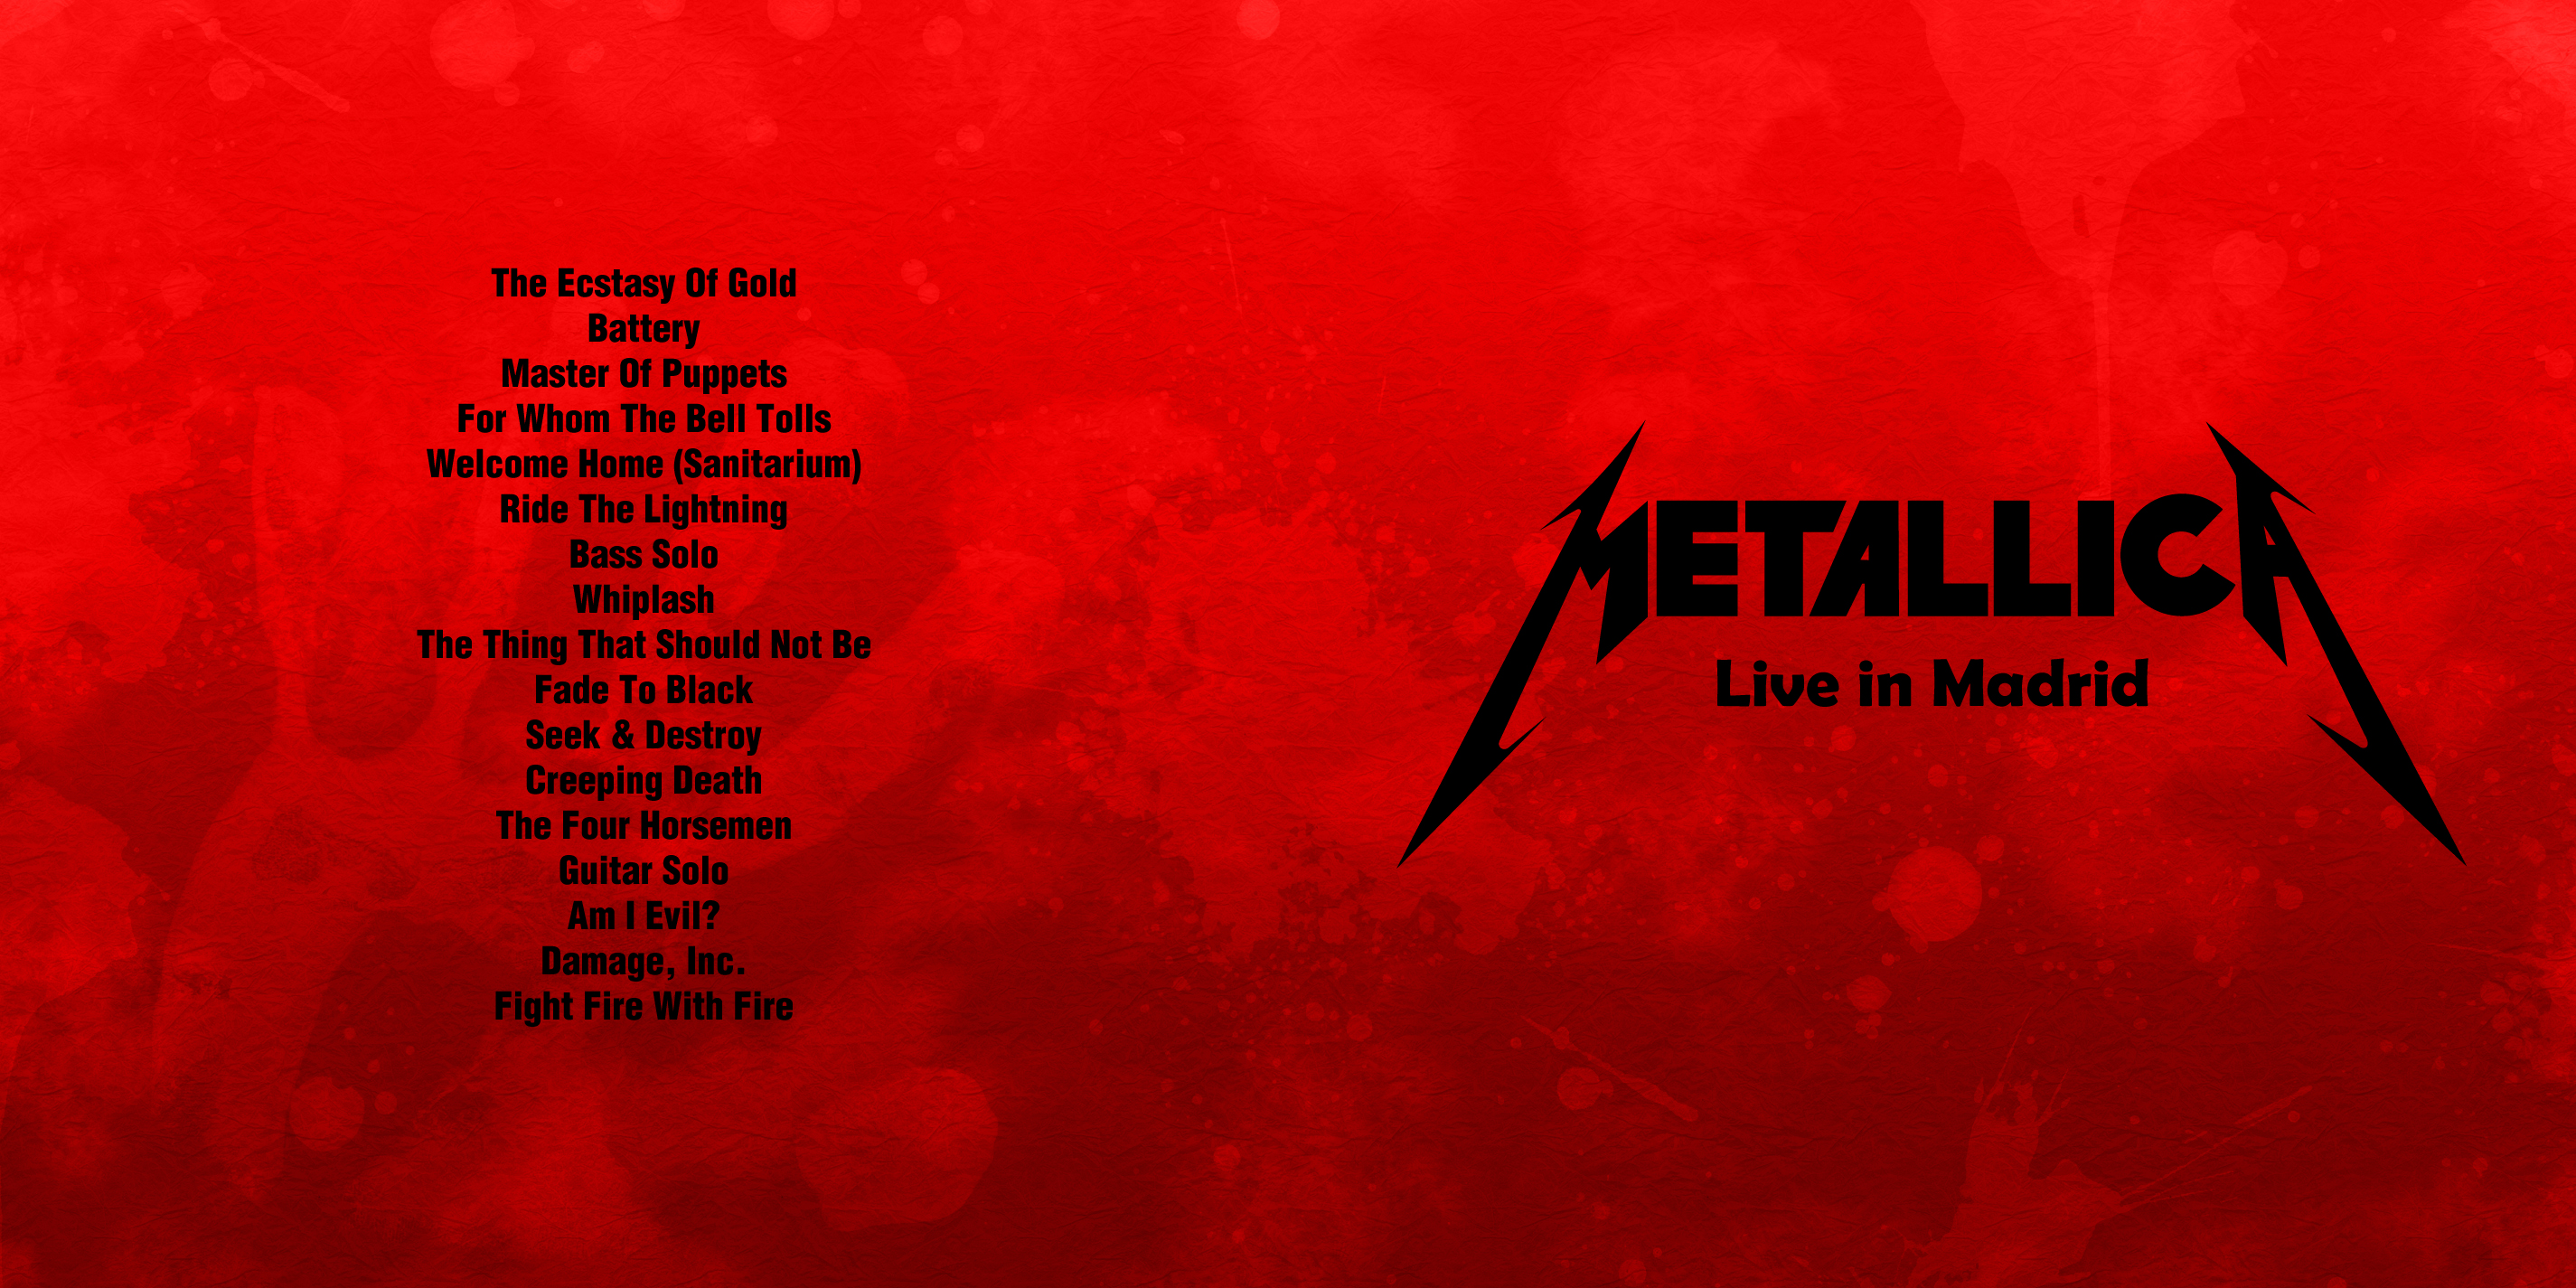 Free download METALLICA thrash metal heavy album cover art poster